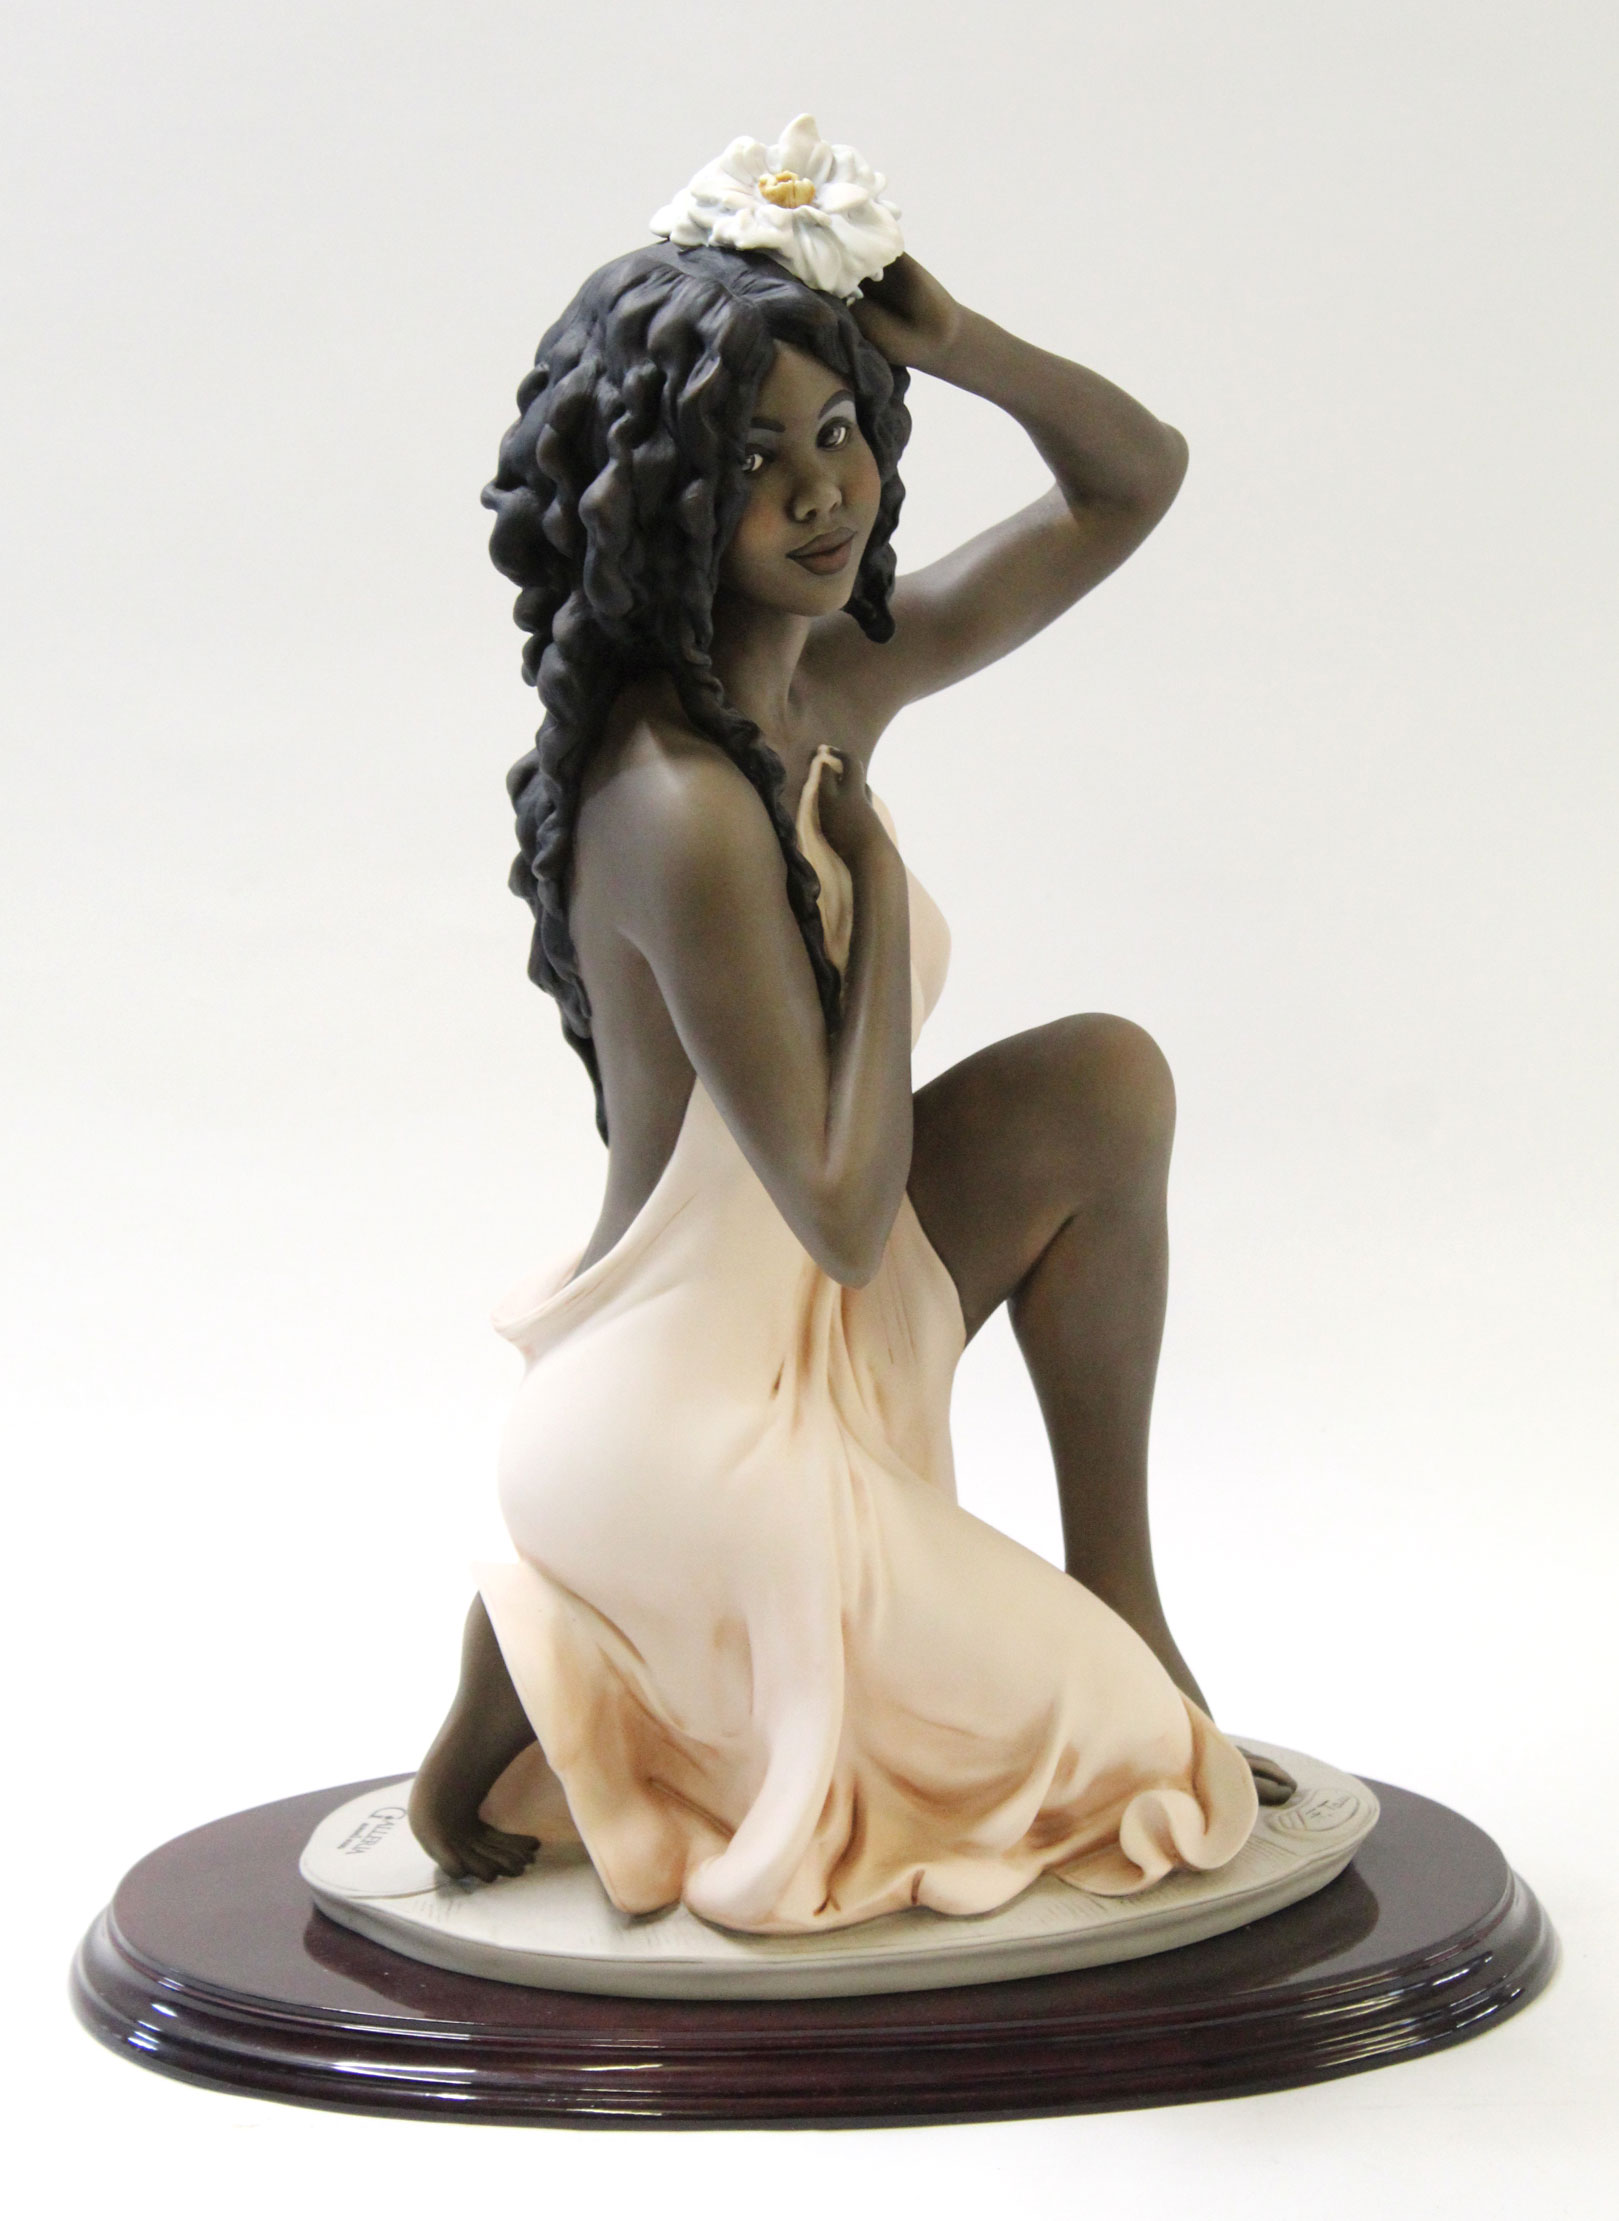 Galleria, Florence Studio, limited edition, (190/1500) ceramic figure, "F Taui", 49cm high